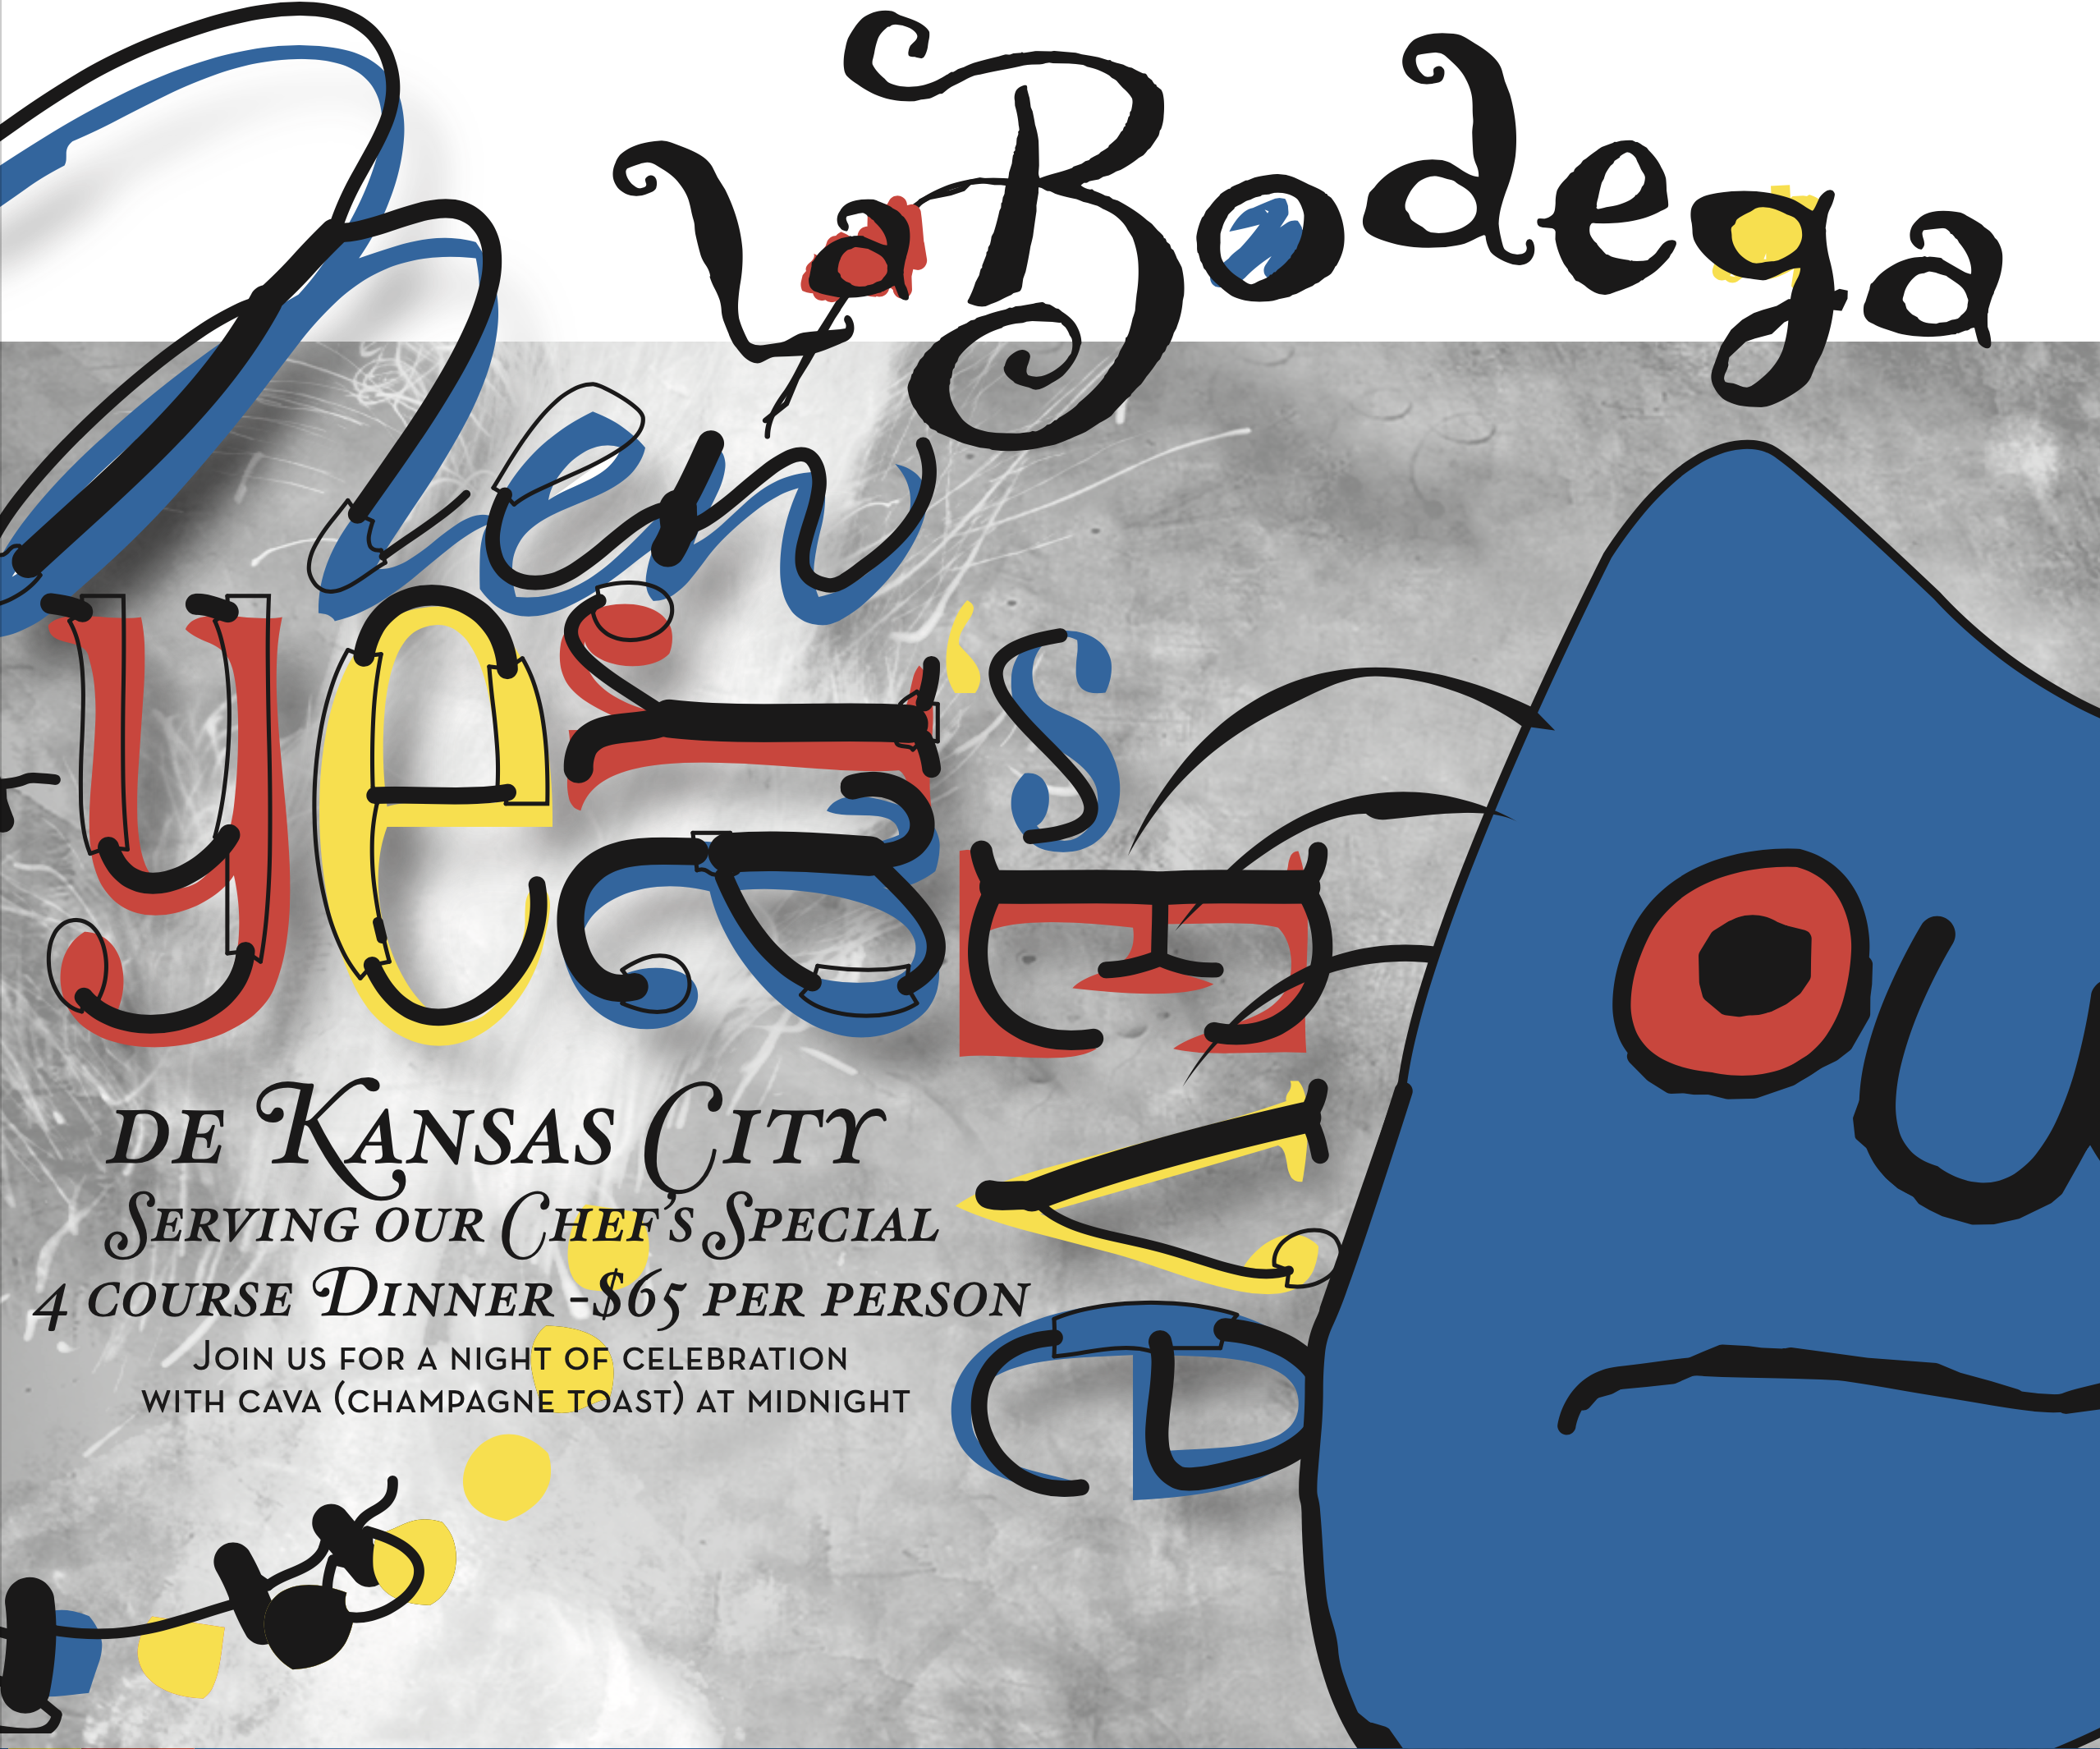 New Years Eve De Kansas City – Originale